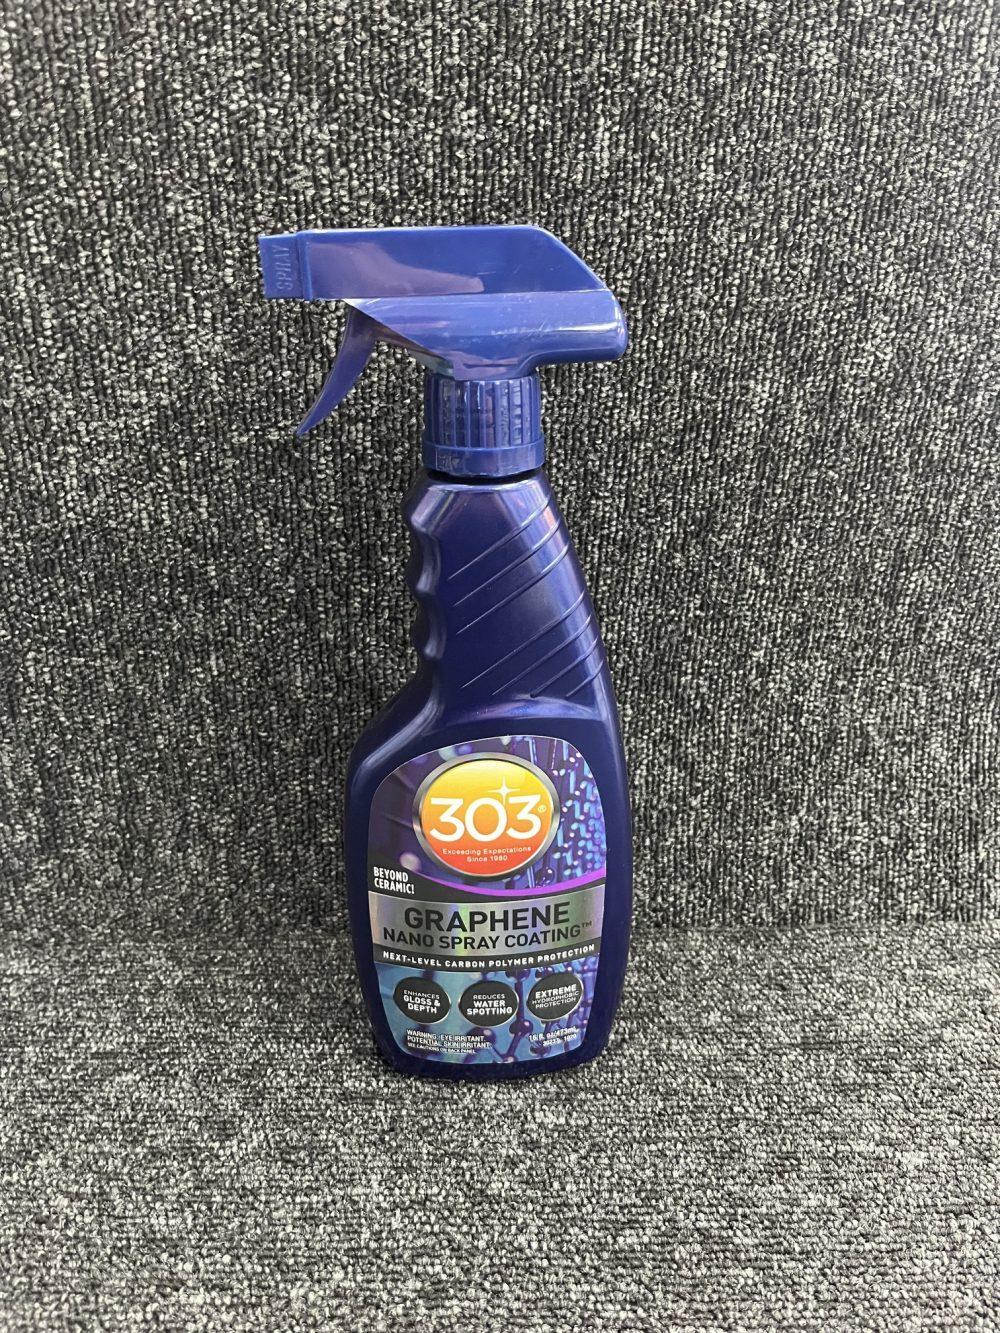 303 Graphene Nano Spray Coating, Enhances Gloss and Depth